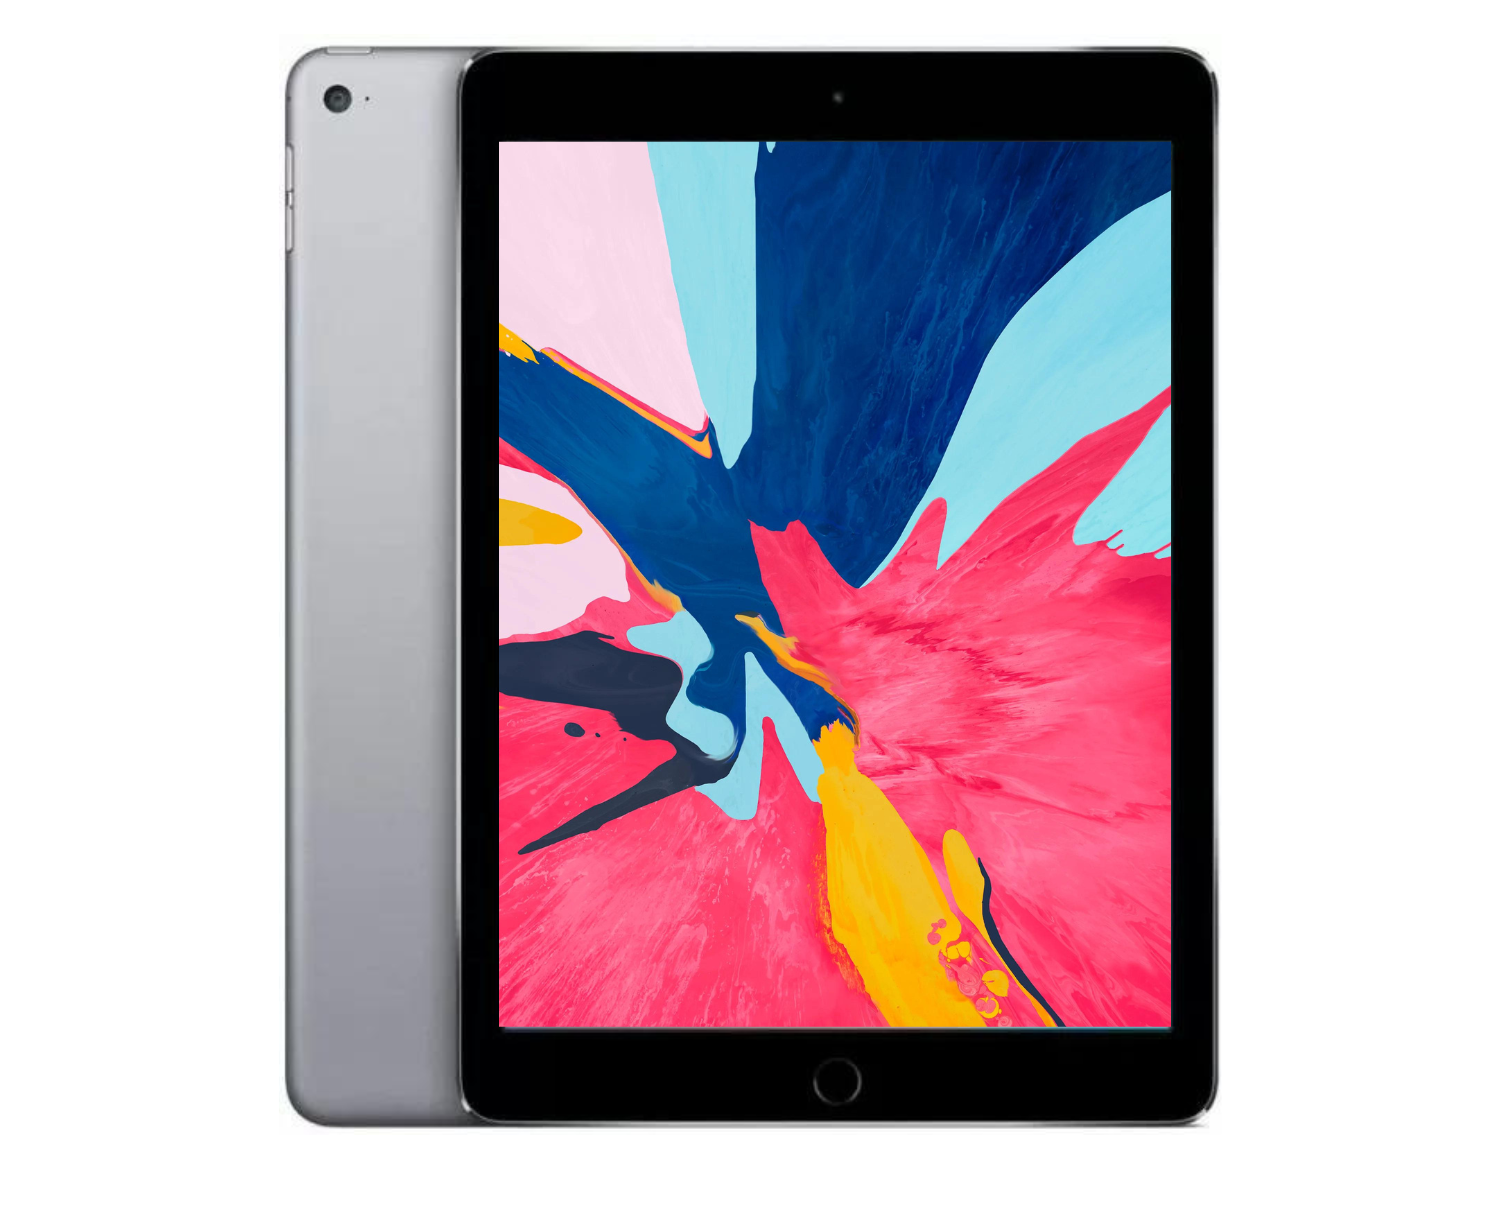 Apple iPad Air 2 32GB WiFi A1566 Space Grey at Affordable Mac